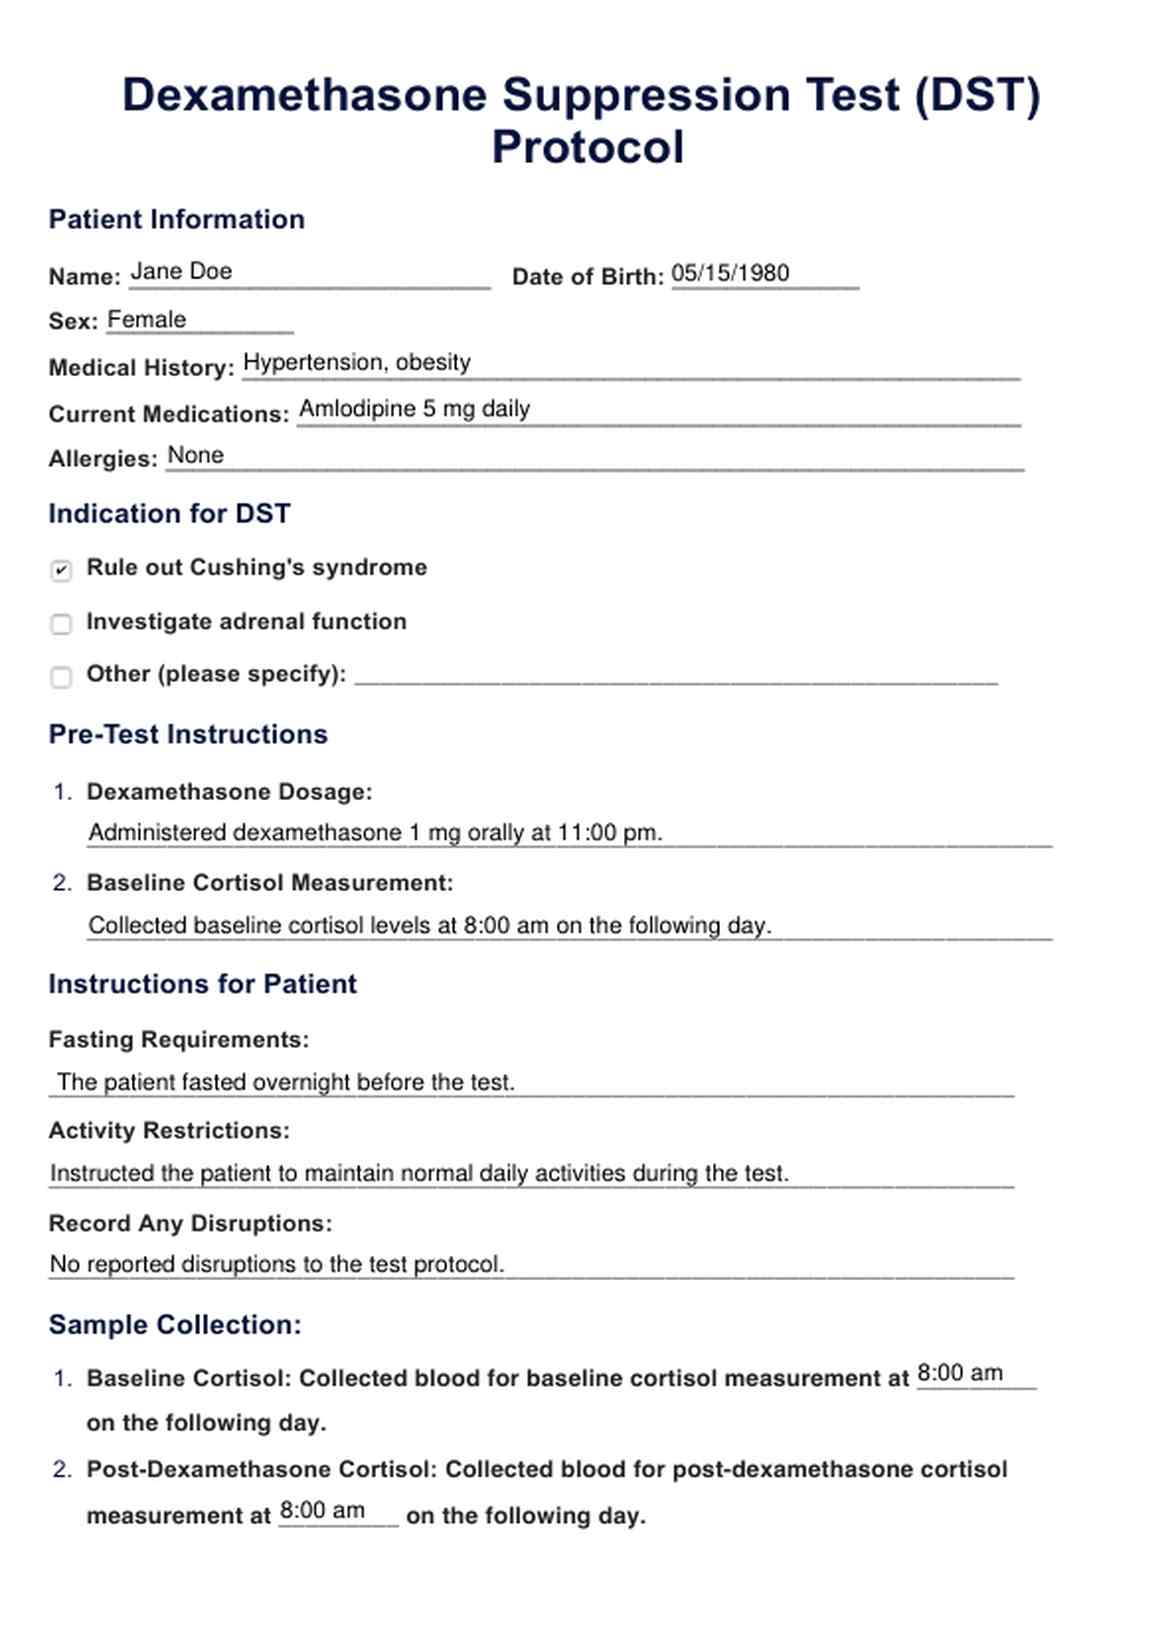 Dexamethasone Suppression Test PDF Example